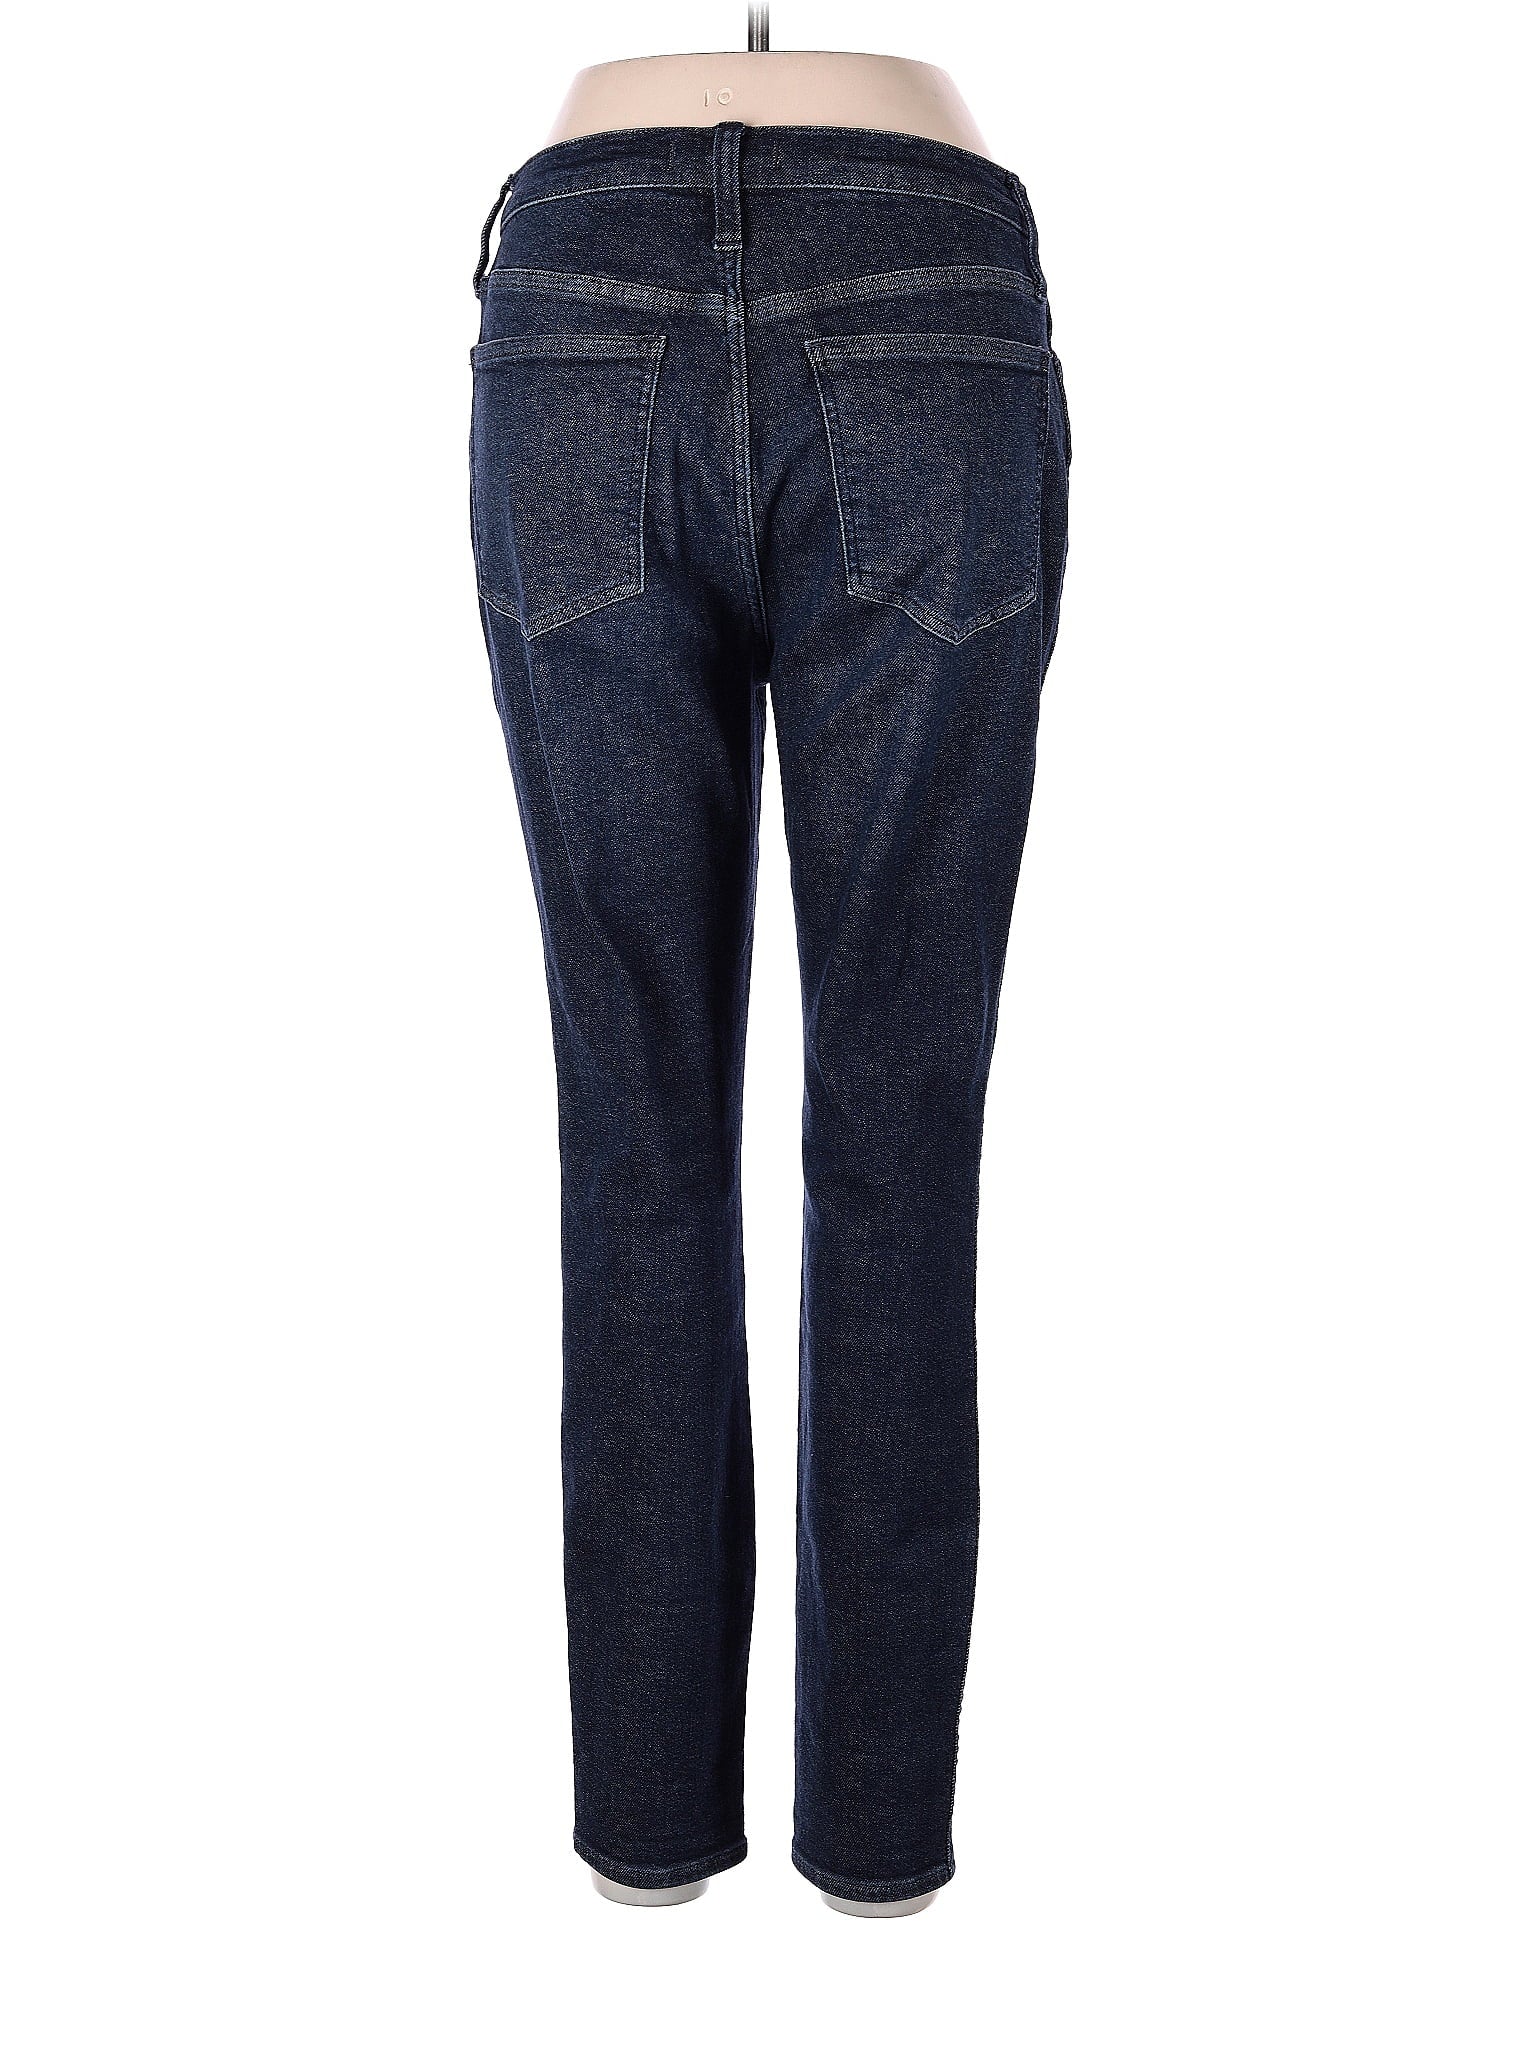 High-Rise Boyjeans Jeans in Dark Wash waist size - 29